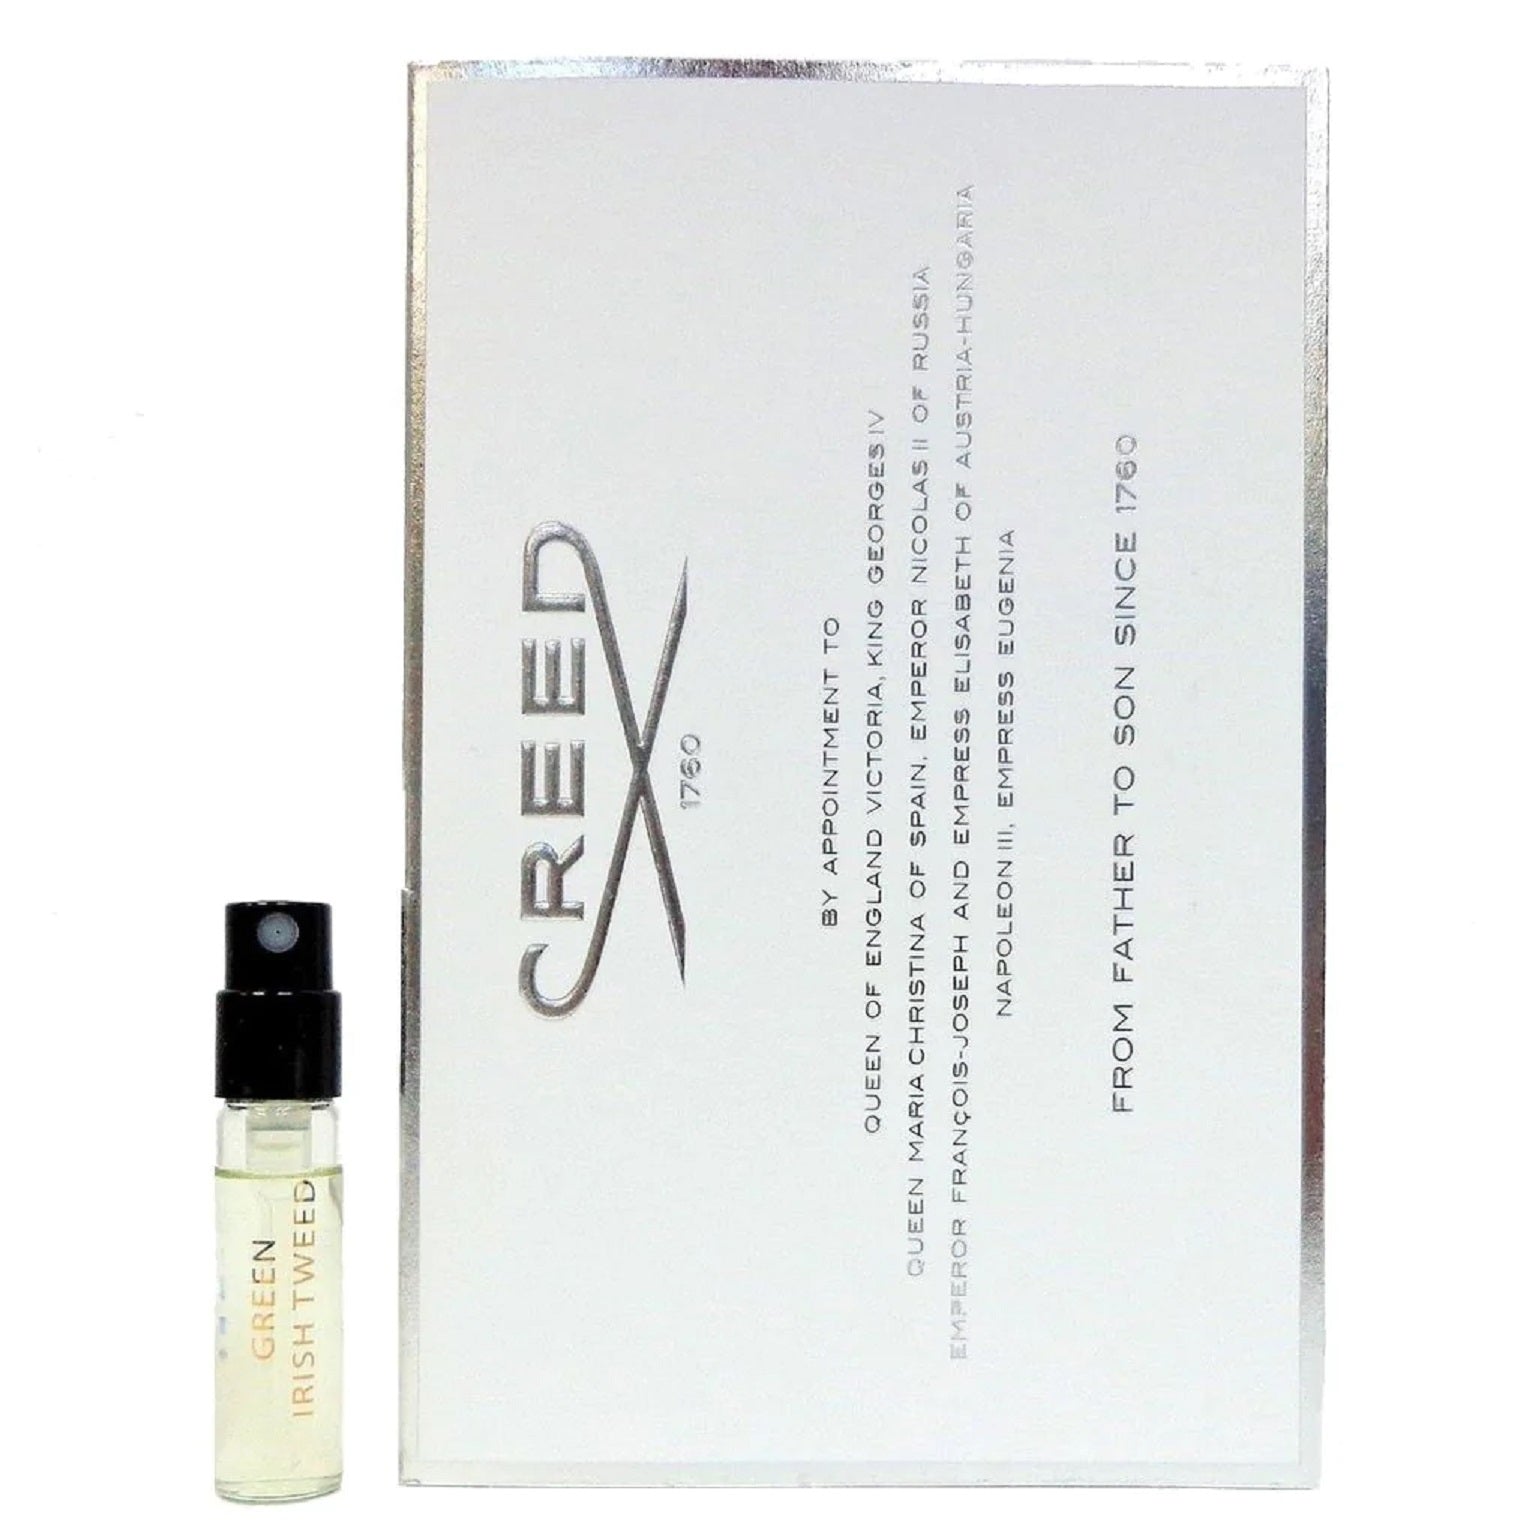 Creed Green Irish Tweed edp 2.5ml official perfume sample